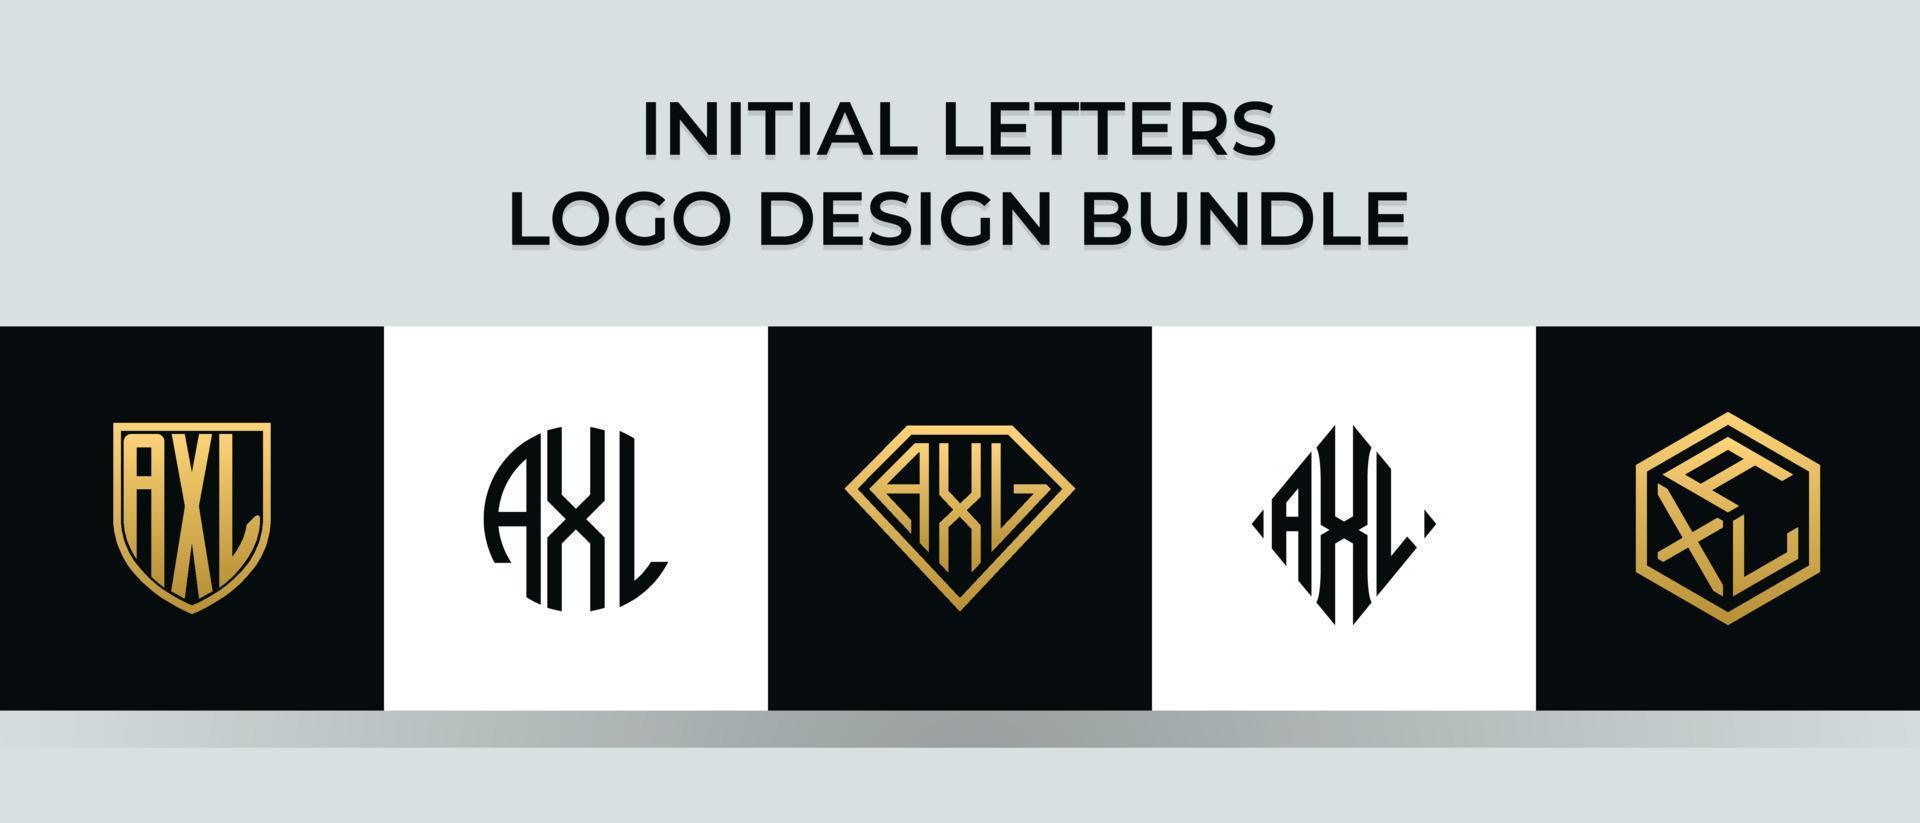 paquet de conceptions de logo axl de lettres initiales vecteur